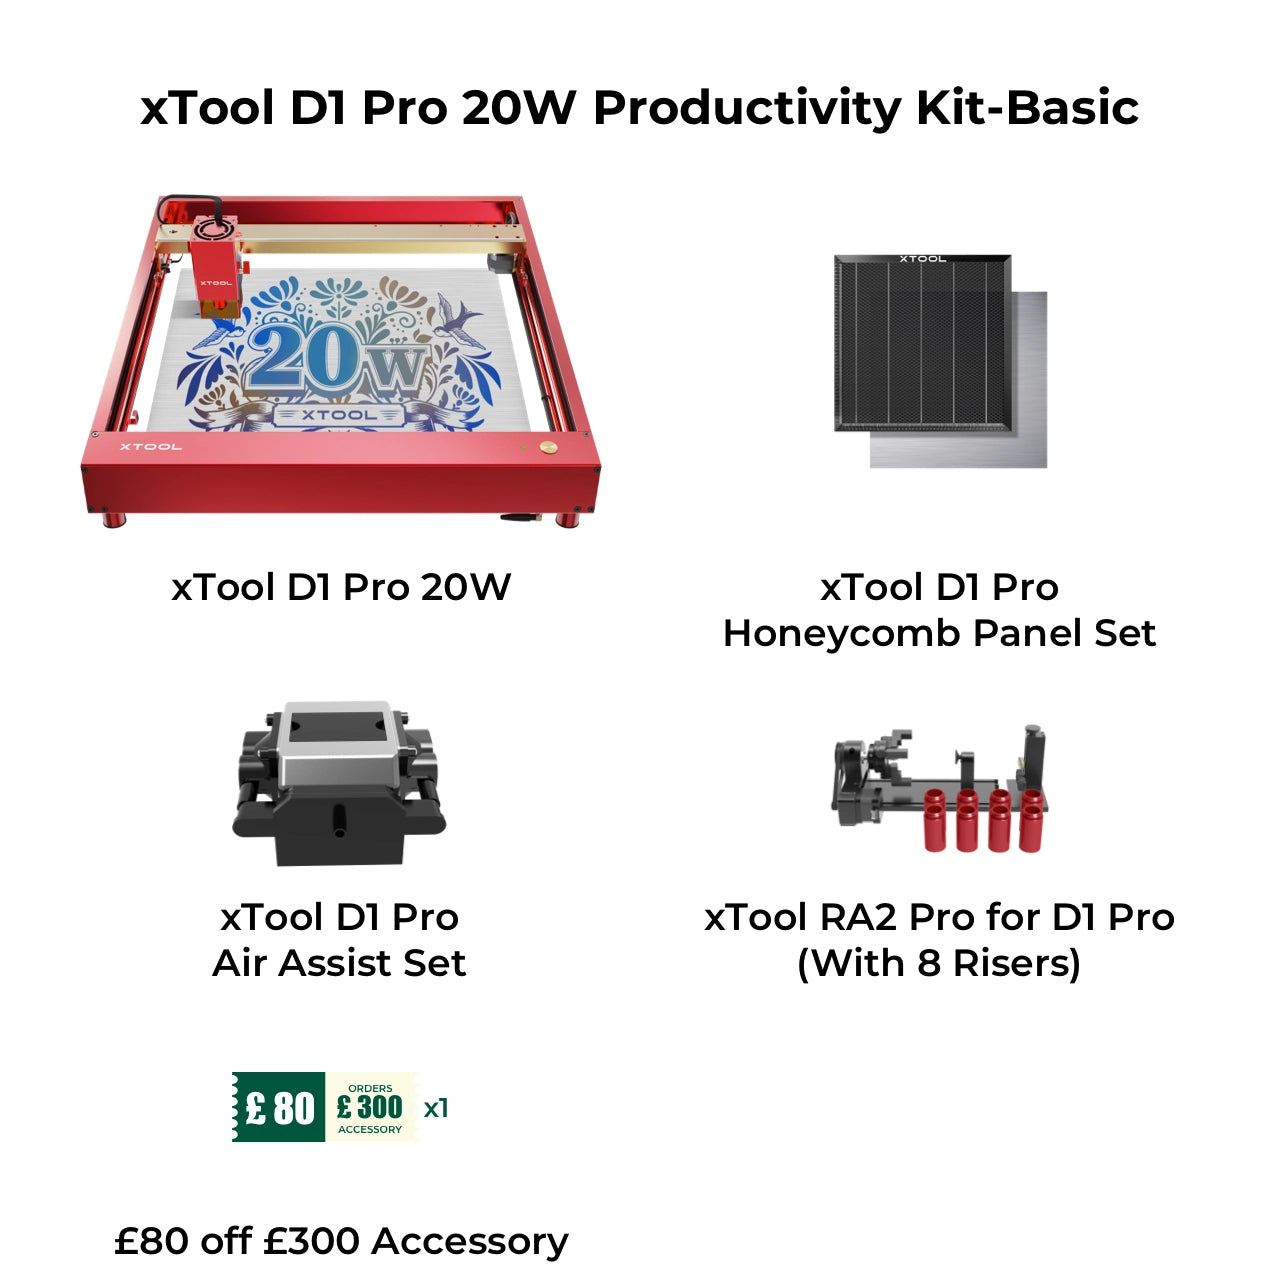 xTool D1 Pro 20W Productivity Kit-Basic